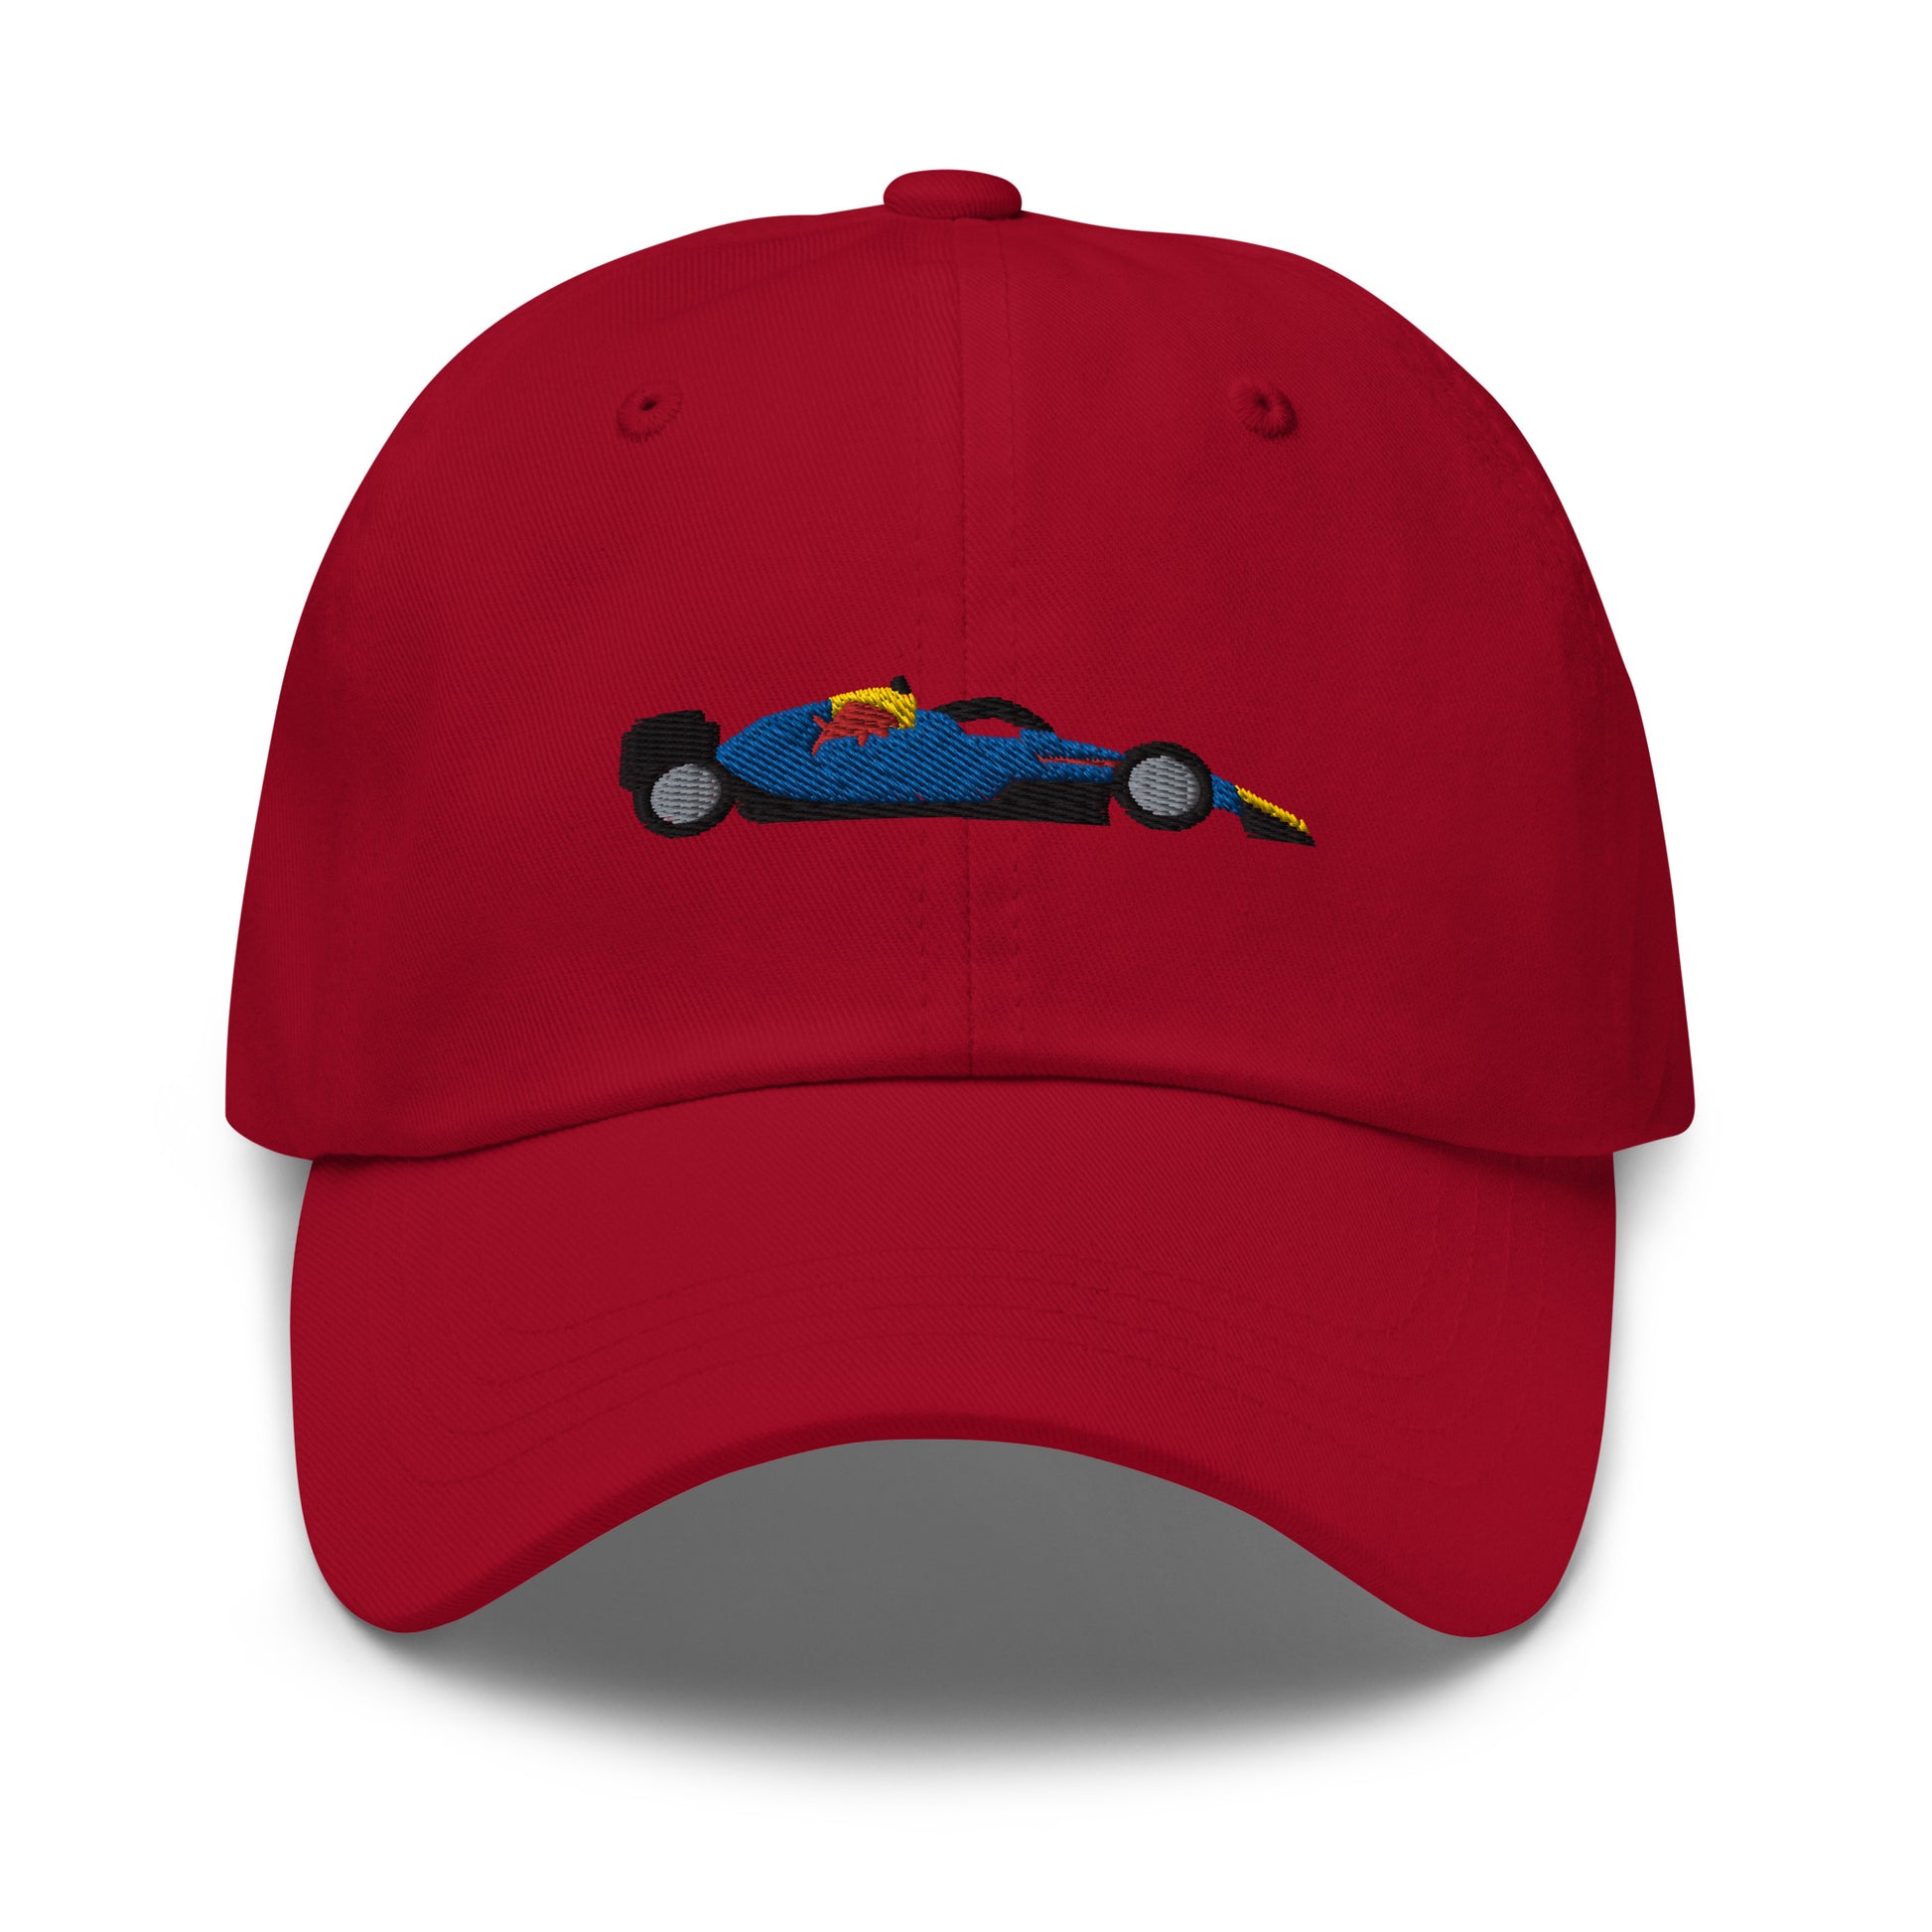 Red bull racing car hat red